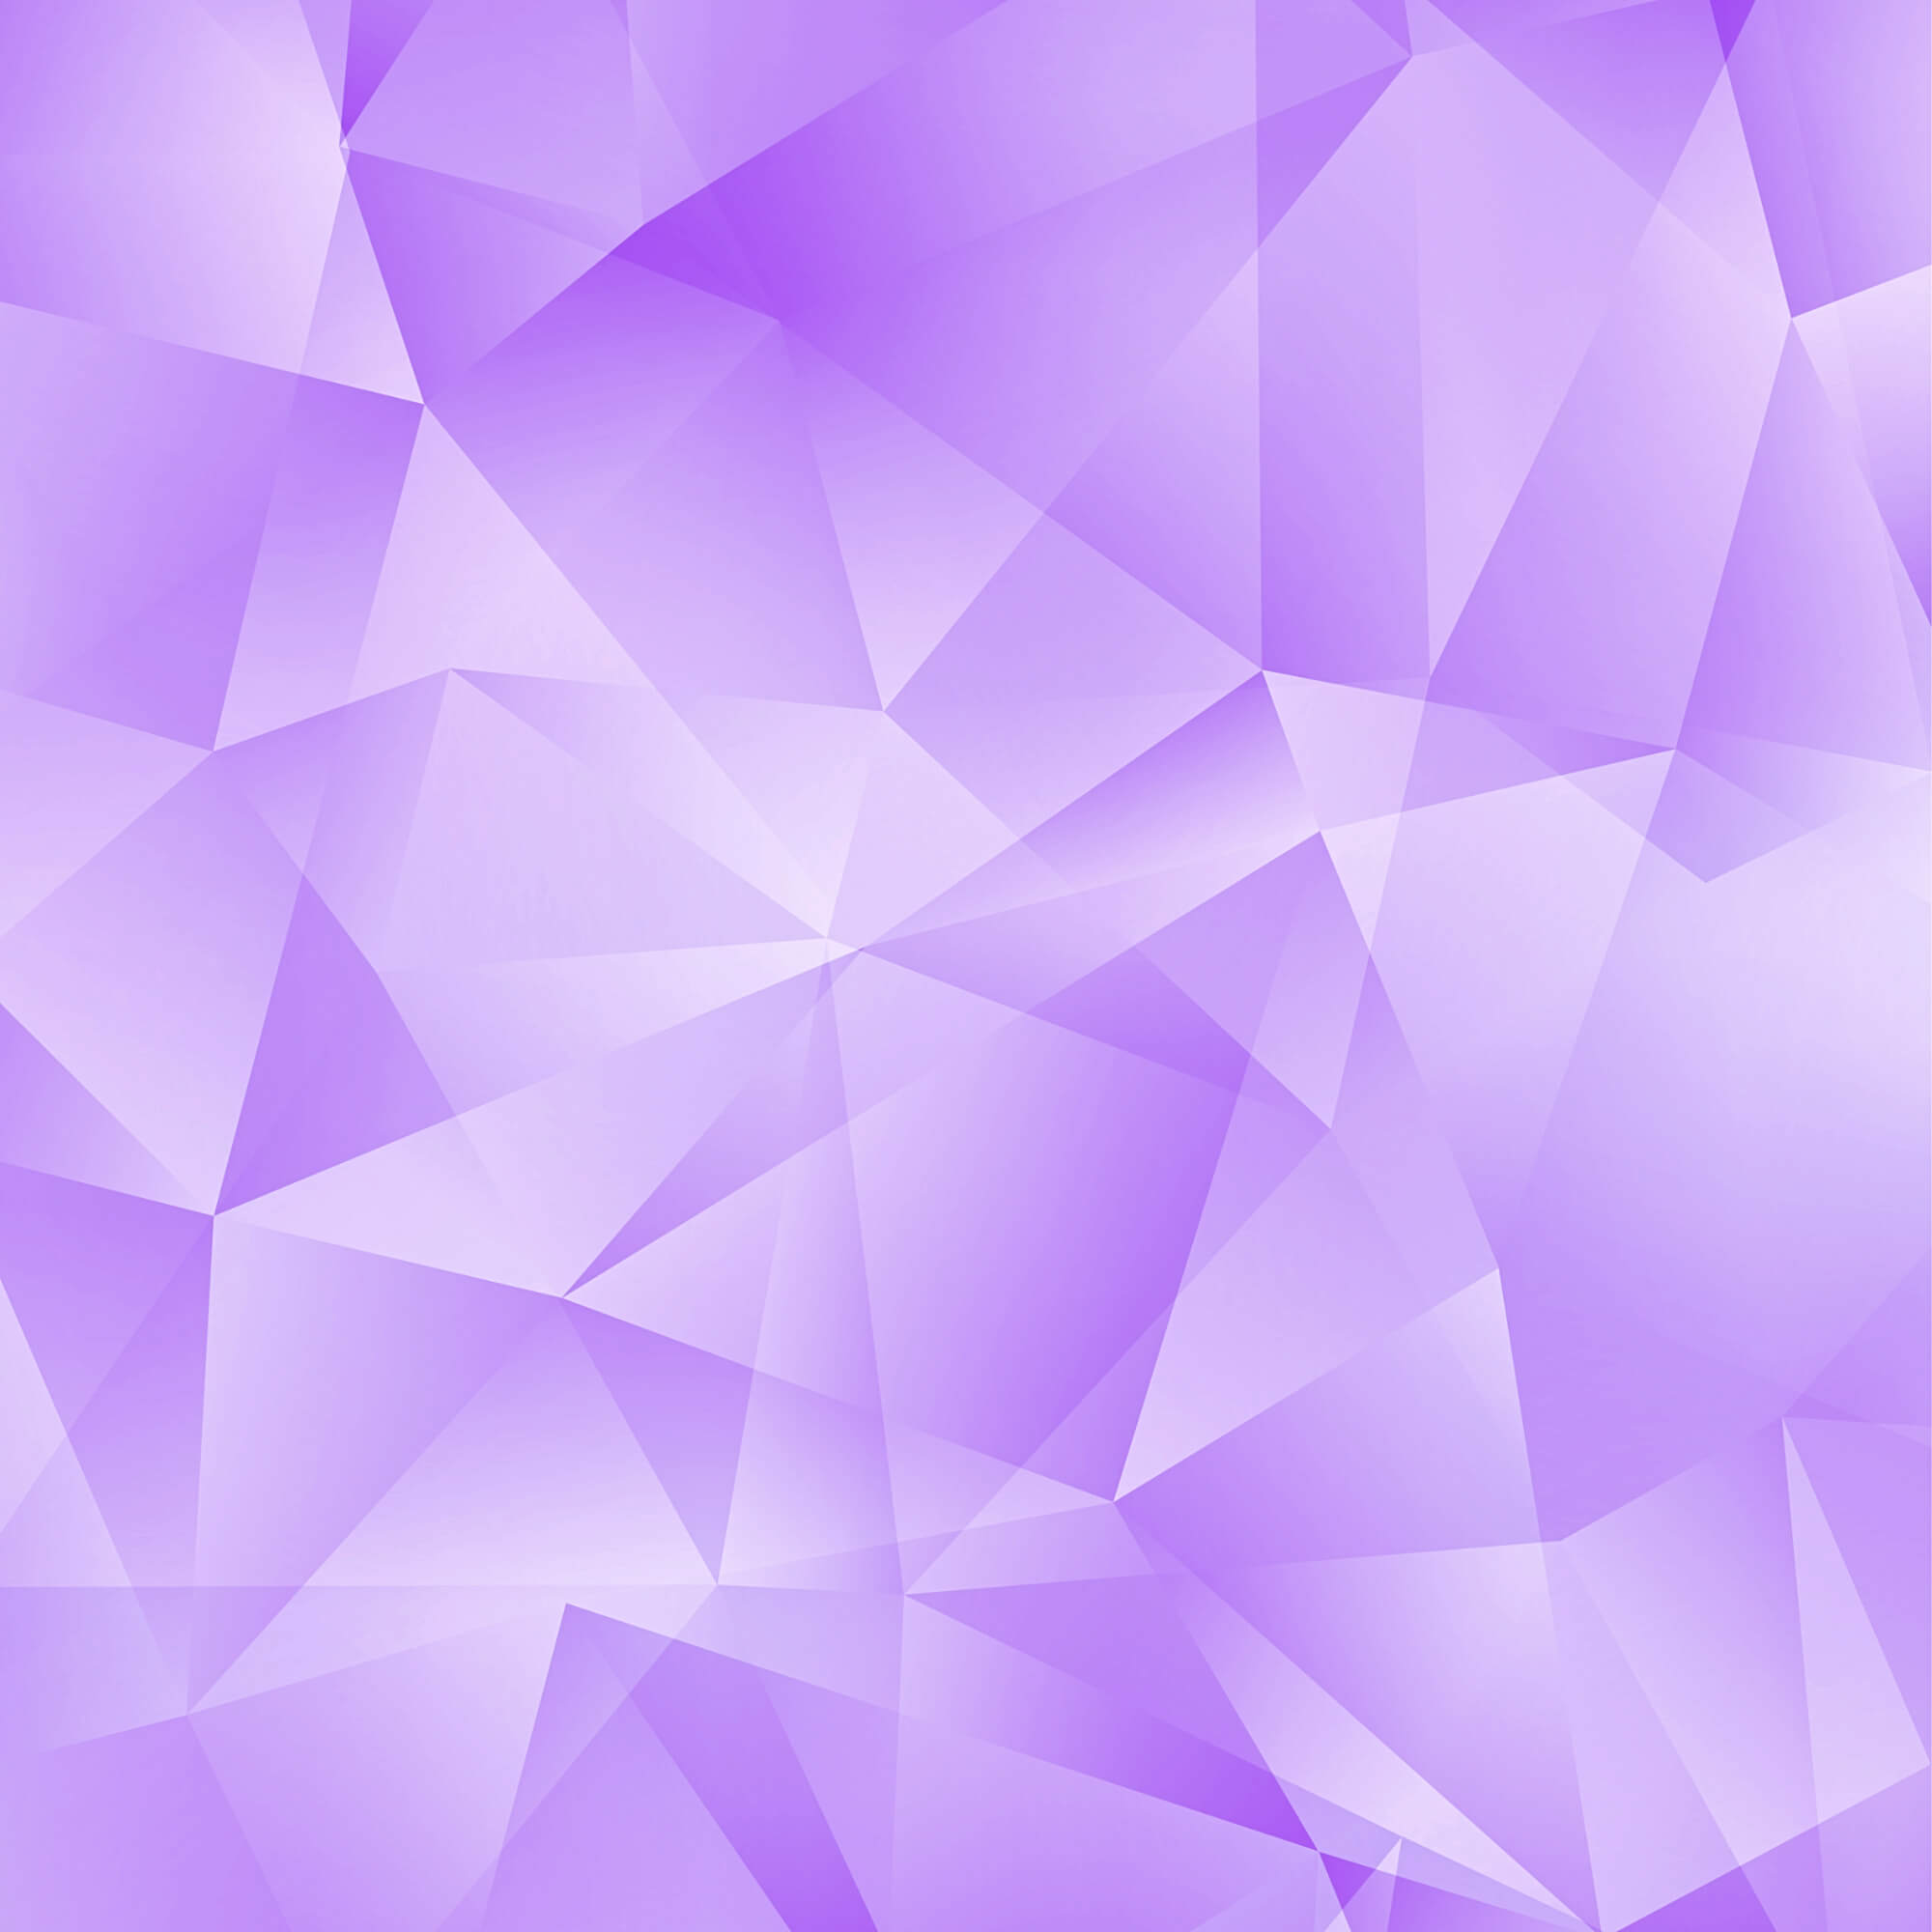 dark purple backgrounds